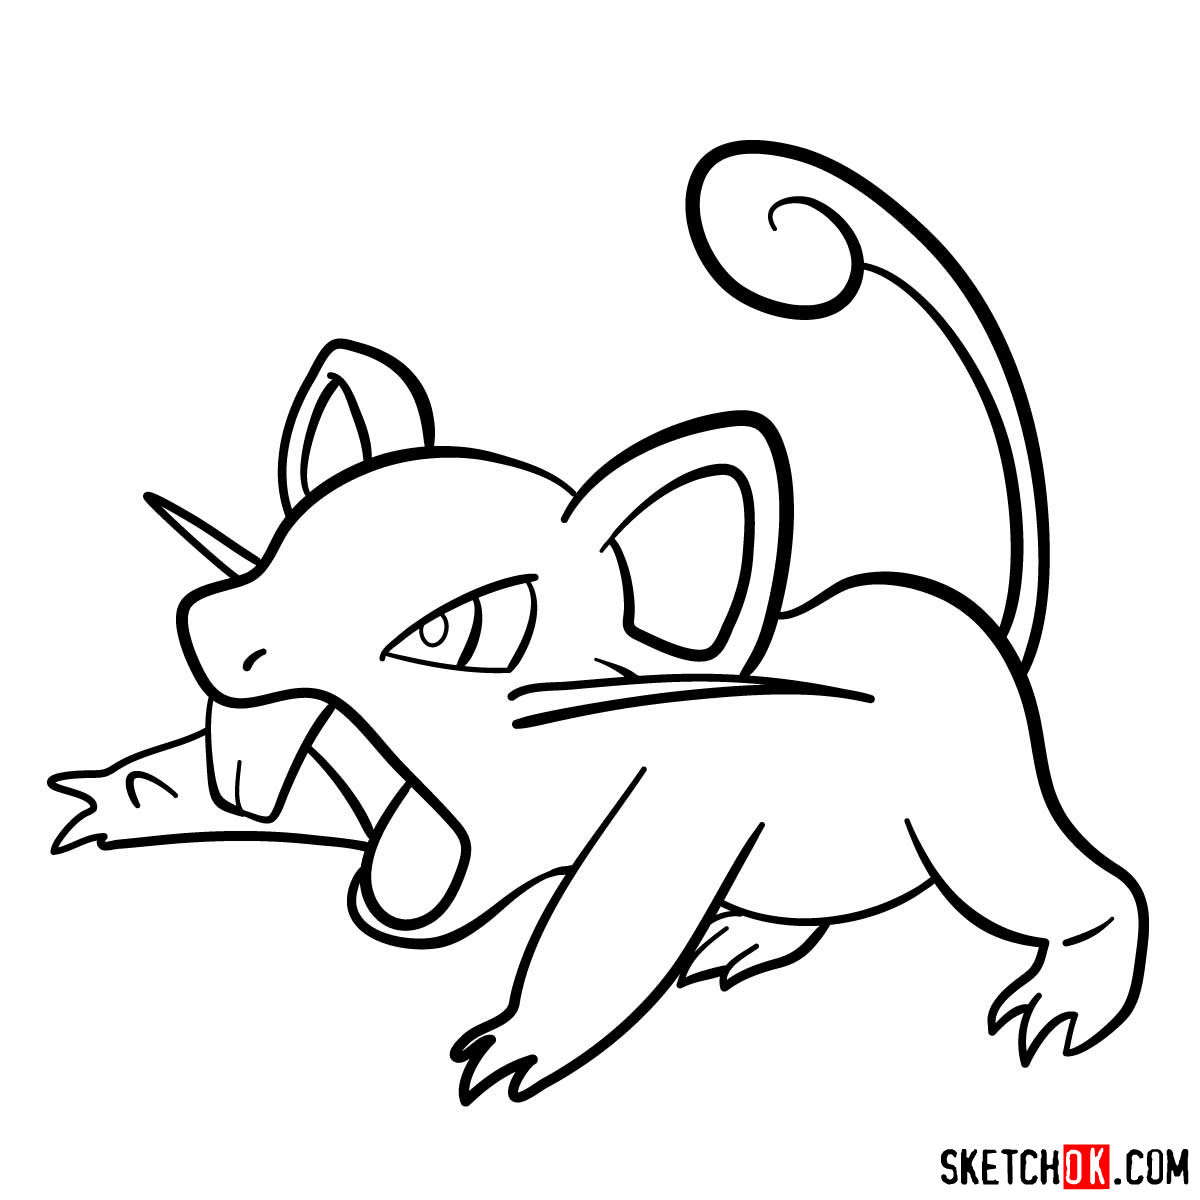 How to draw Rattata Pokemon - step 10